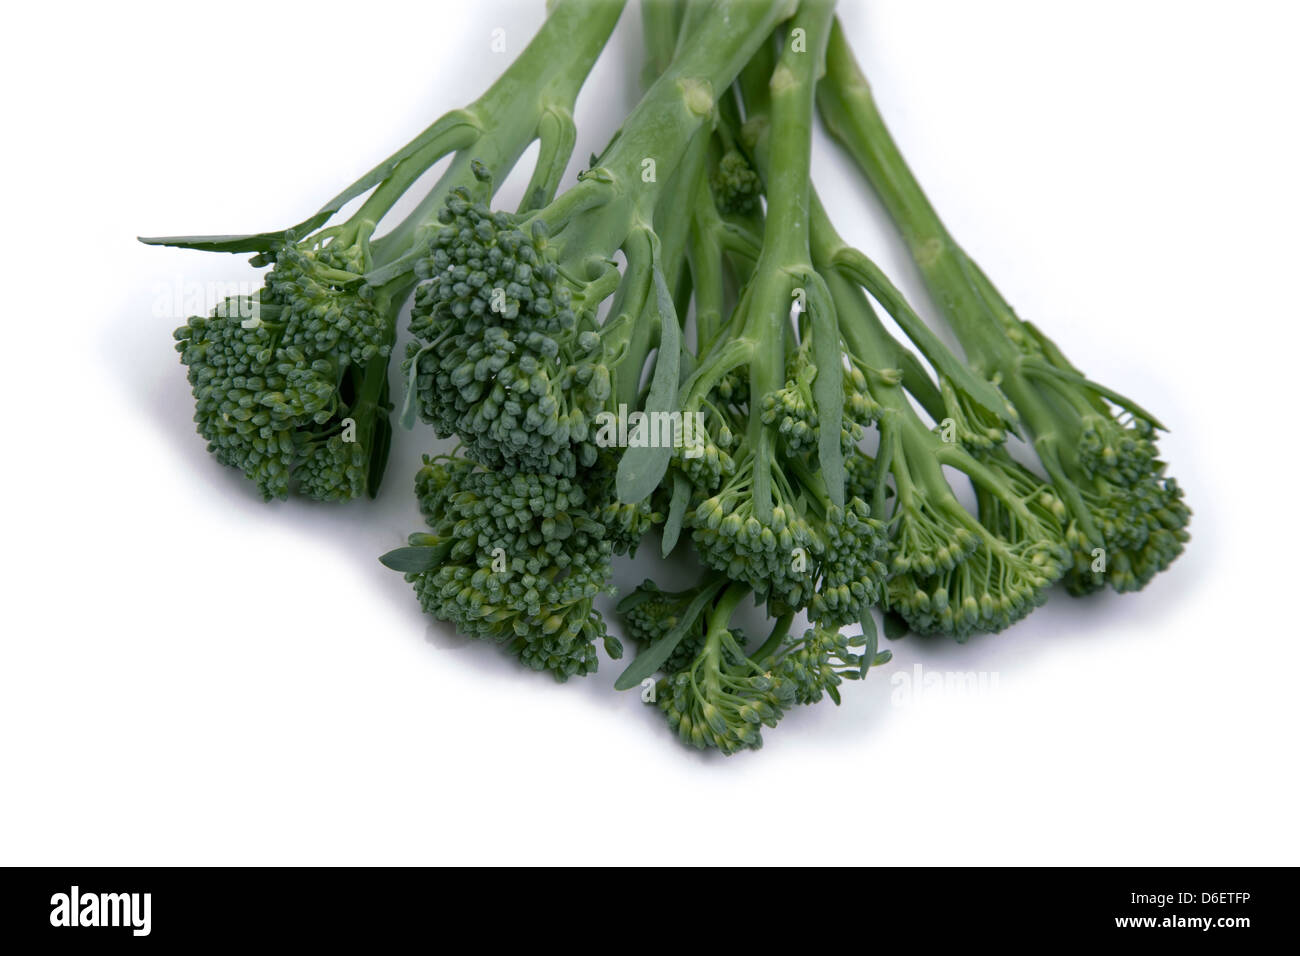 Long stem Broccoli on white background Stock Photo